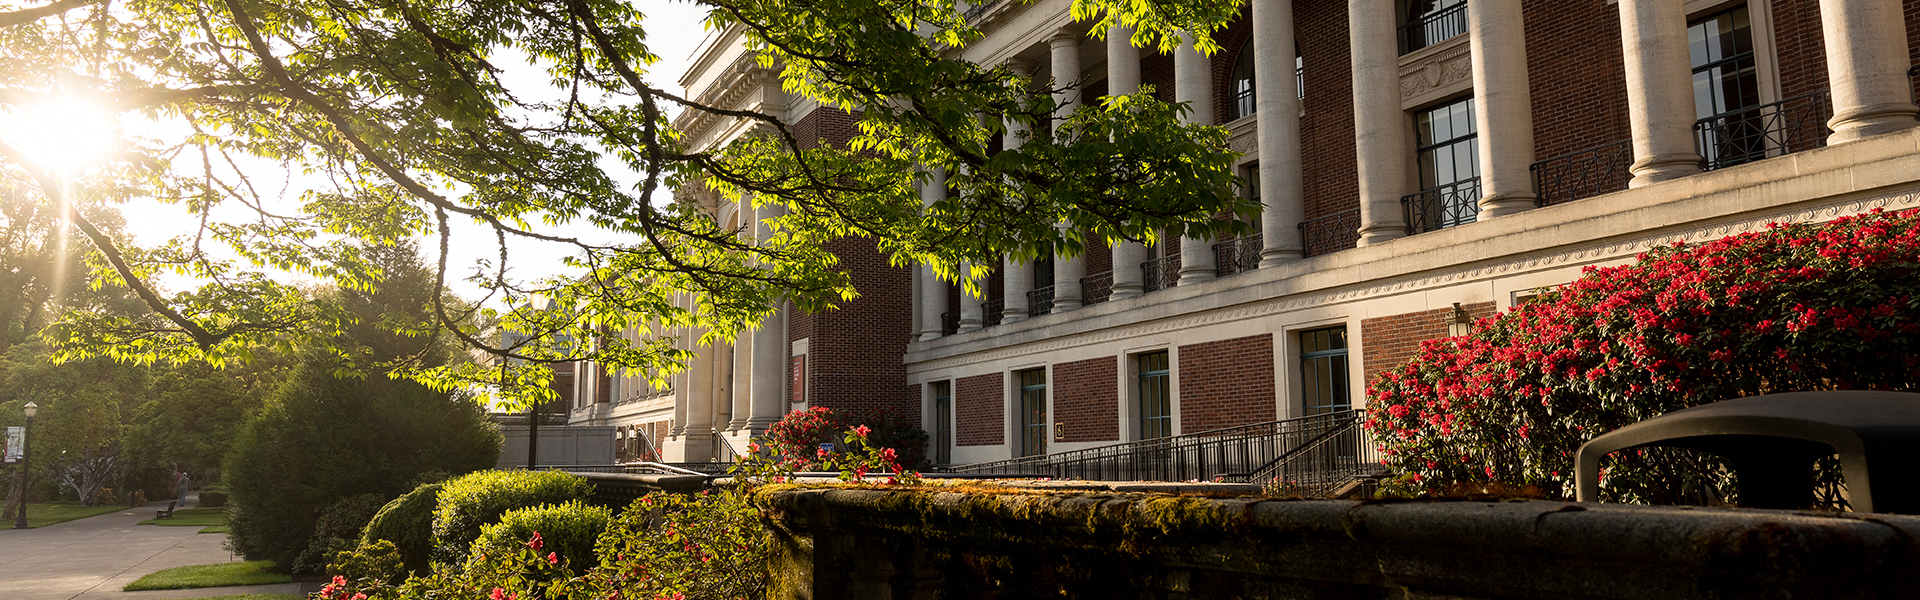 OSU Campus Building with columns, sun shining through trees